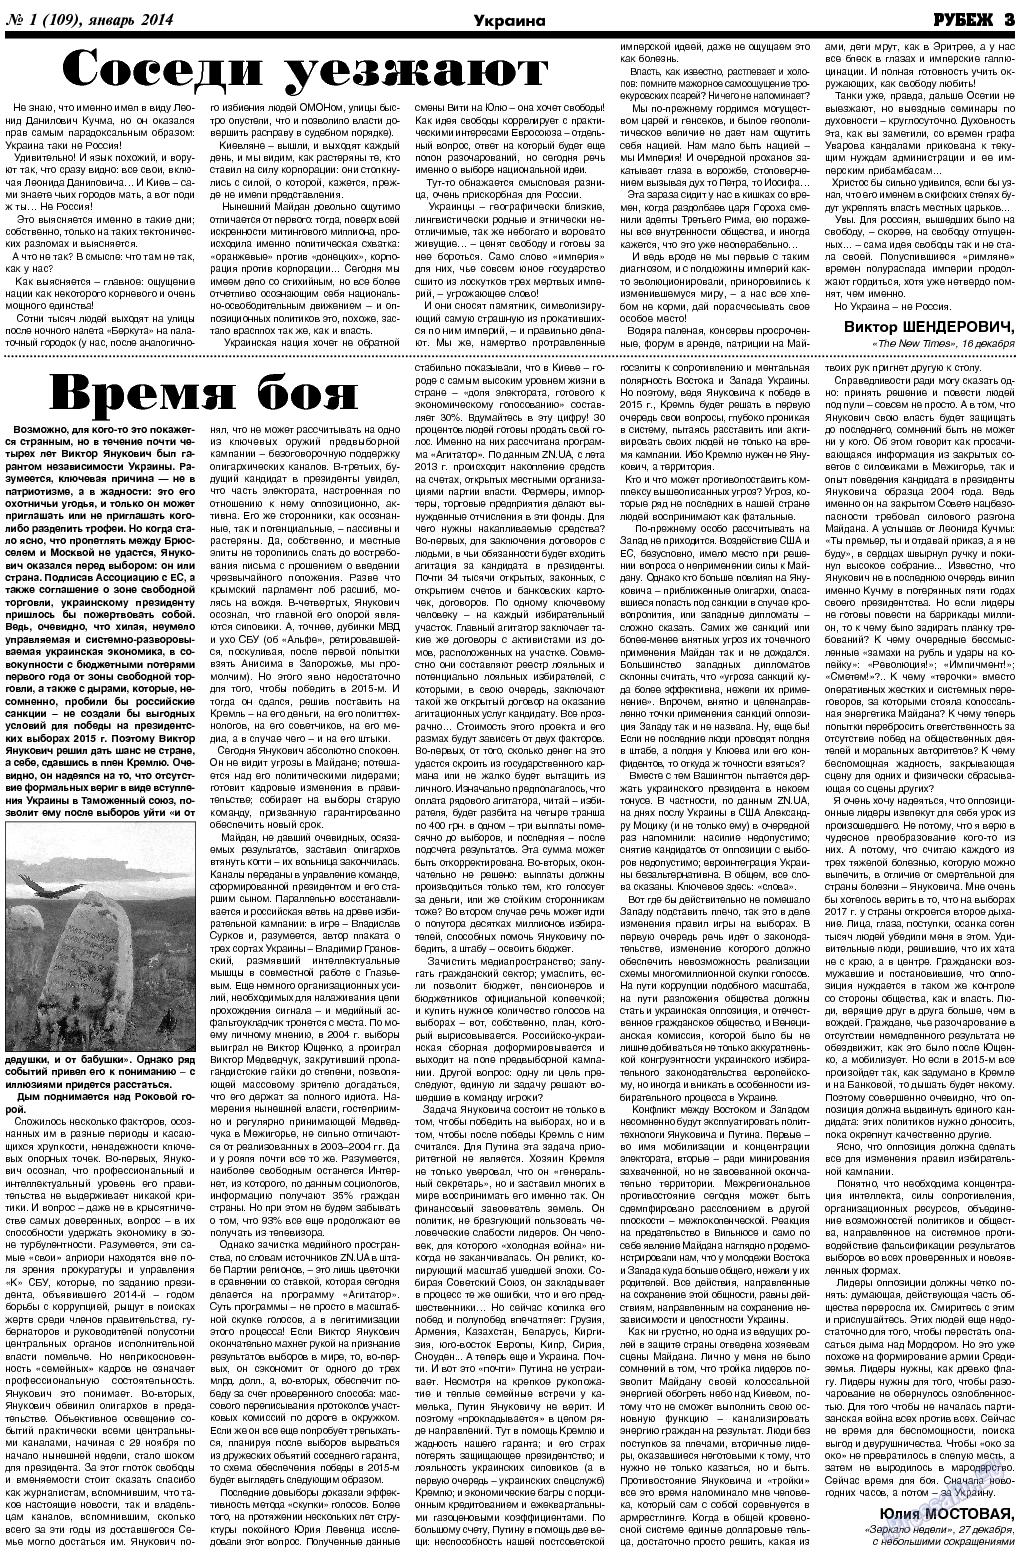 Рубеж, газета. 2014 №1 стр.3